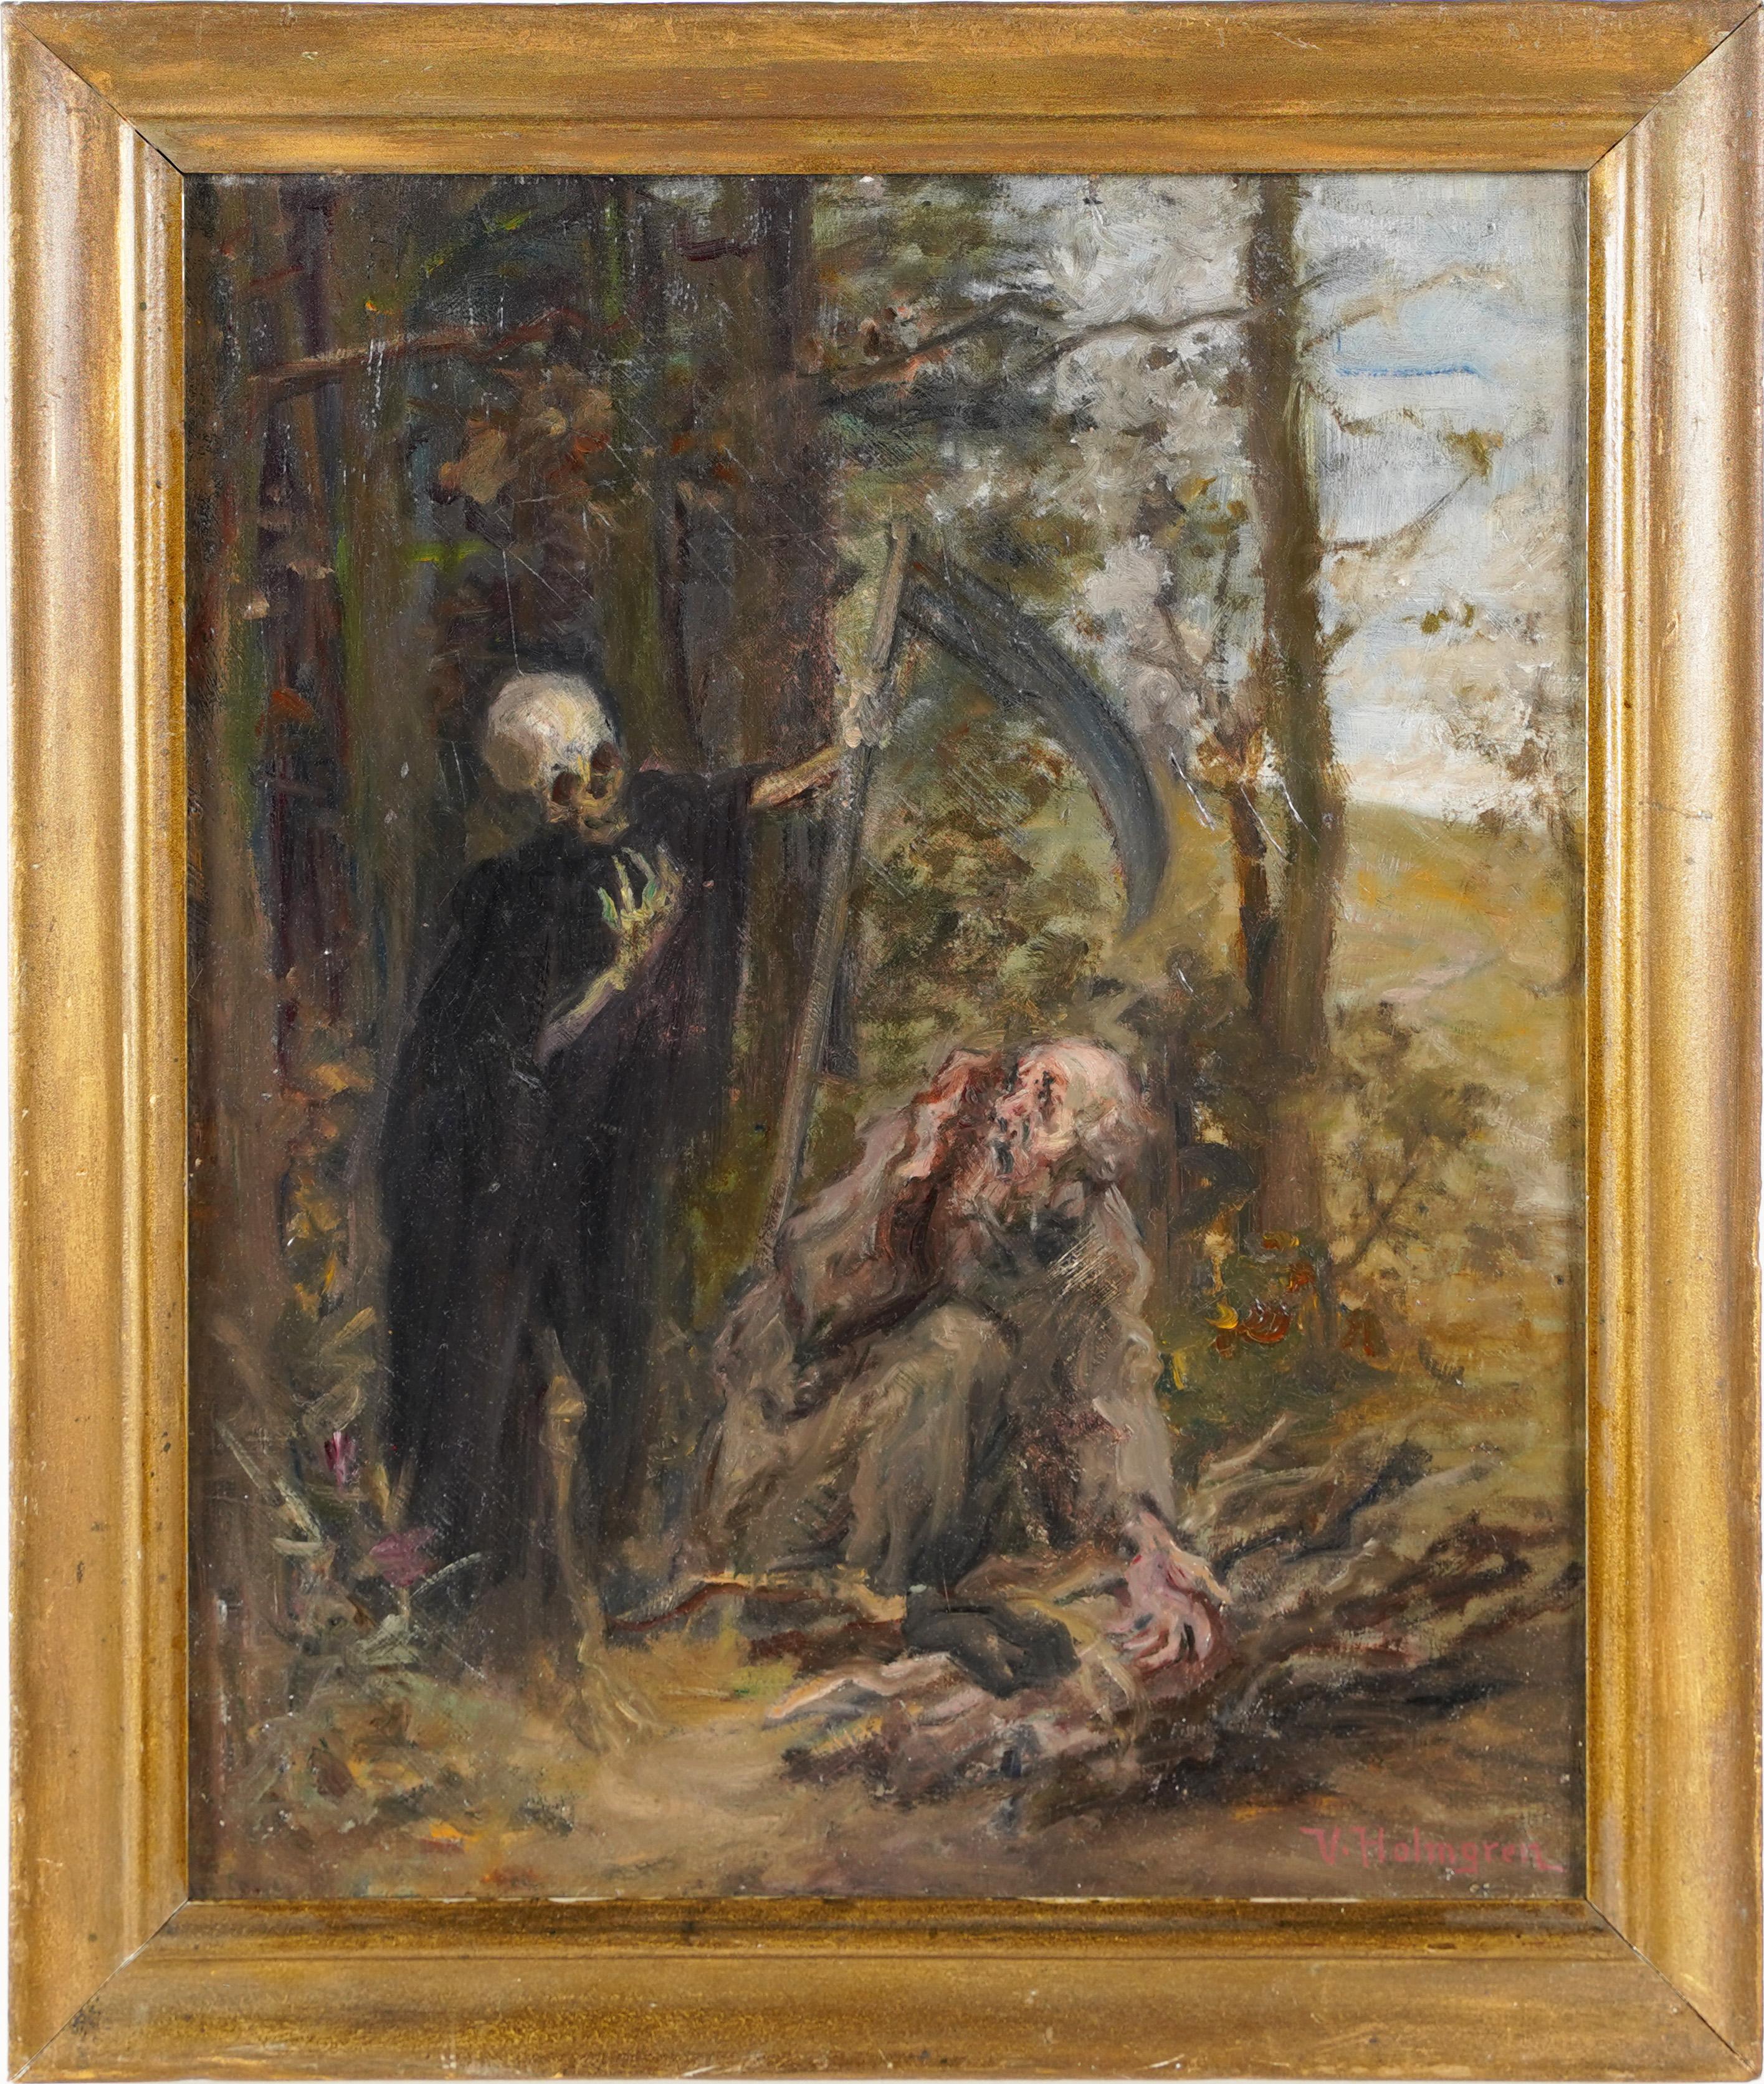 Unknown Landscape Painting - Rare Surreal Grim Reaper Skull Portrait Signed Landscape Oil Painting